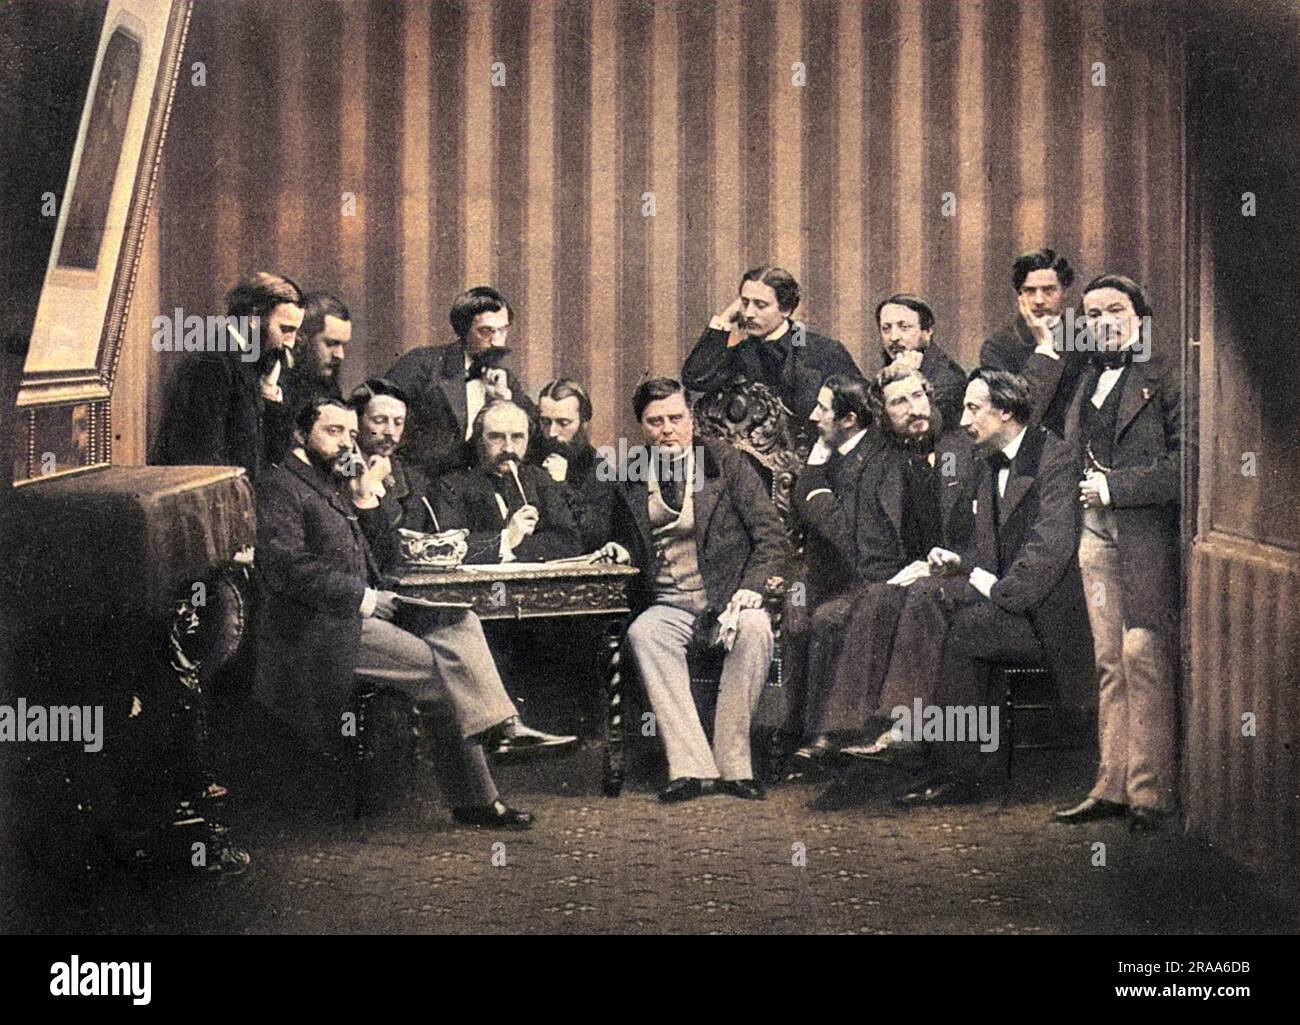 ALEXANDRE comte WALEWSKI (1810 - 1868), Polish-French statesman, ministre des affaires etrangeres, photographed with his staff.     Date: 1860 Stock Photo